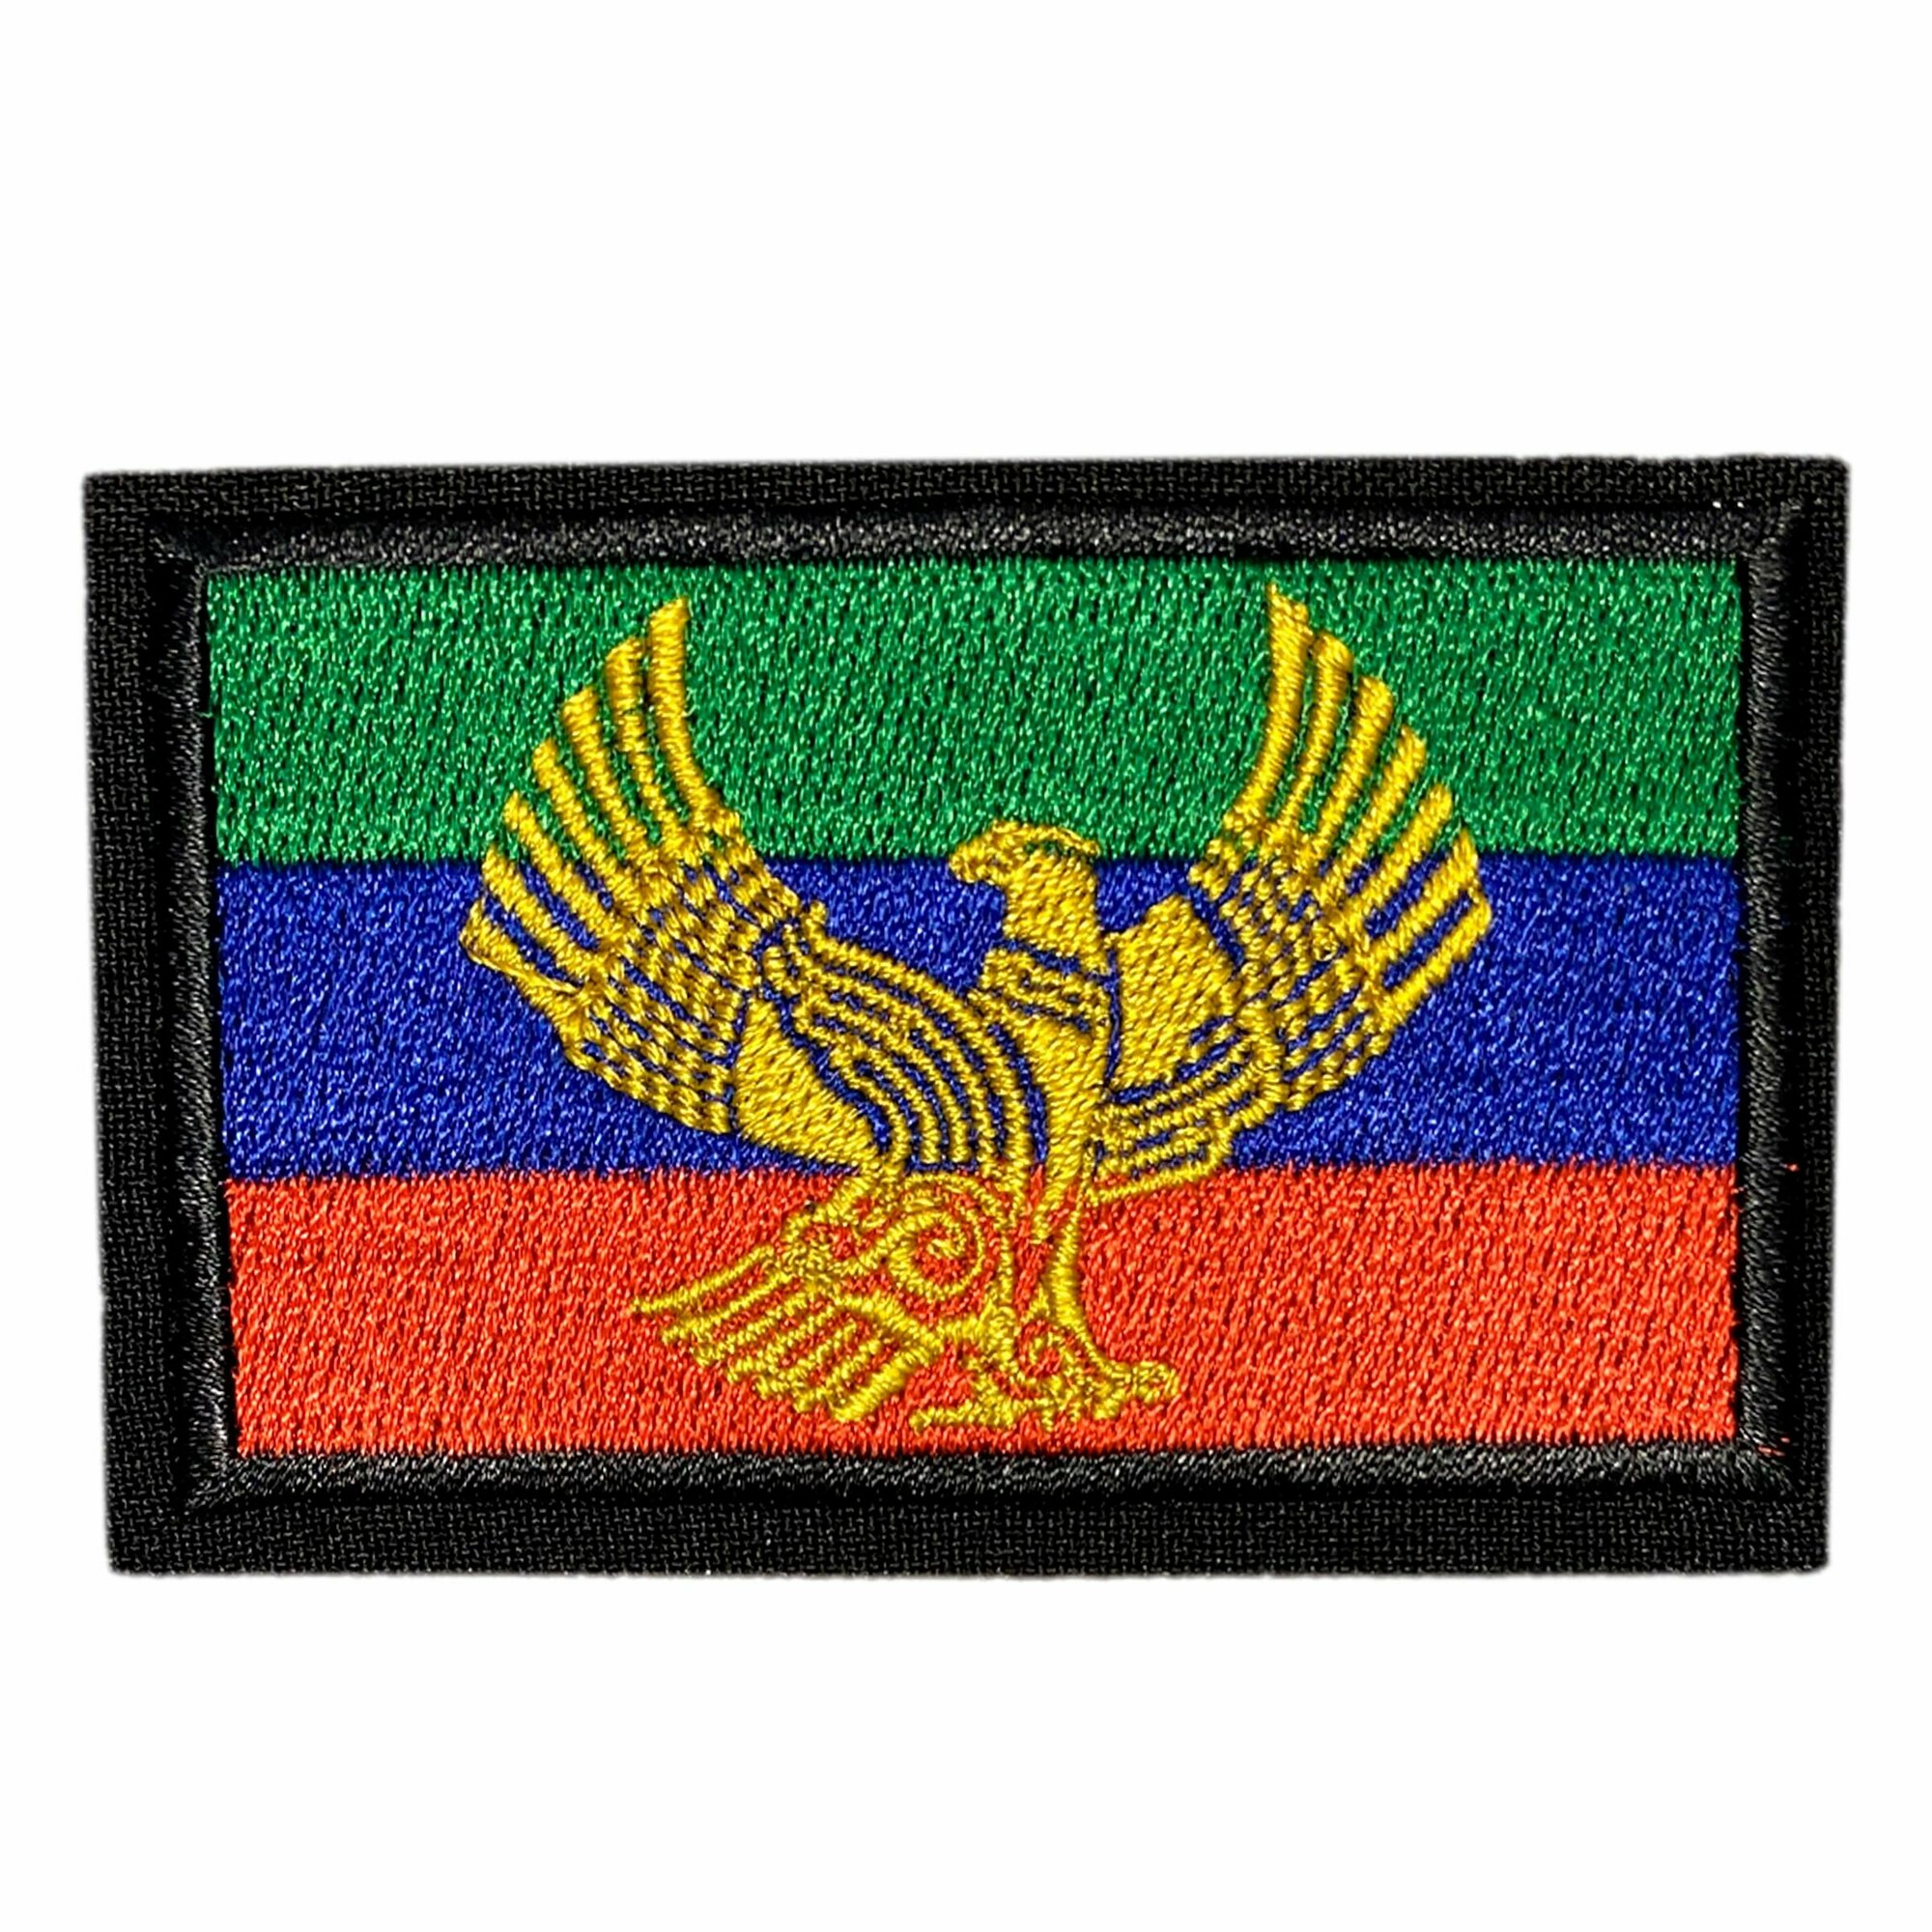 Нашивка шеврон патч (patch) на липучке Флаг Дагестана с гербом размер 8*5 см